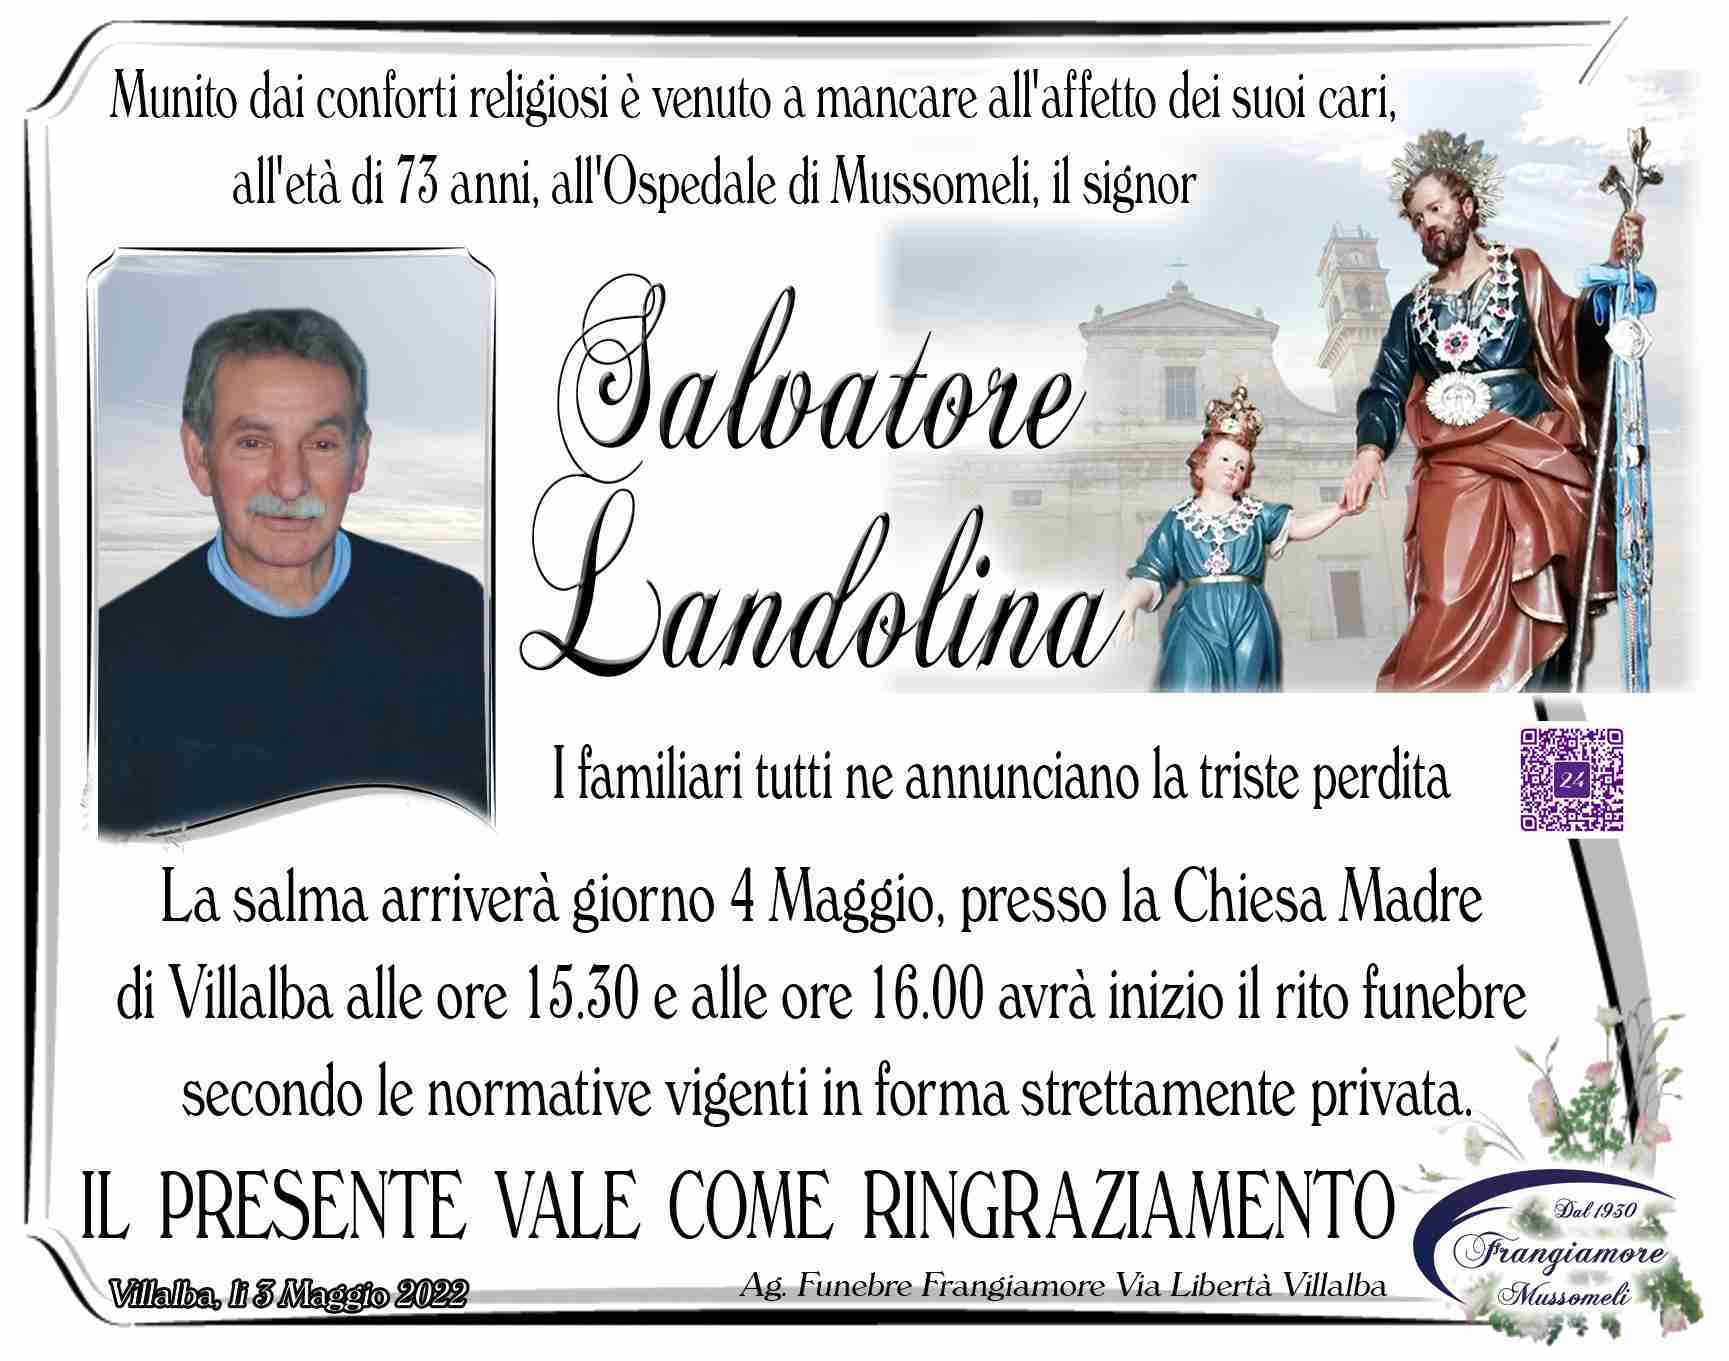 Salvatore Landolina